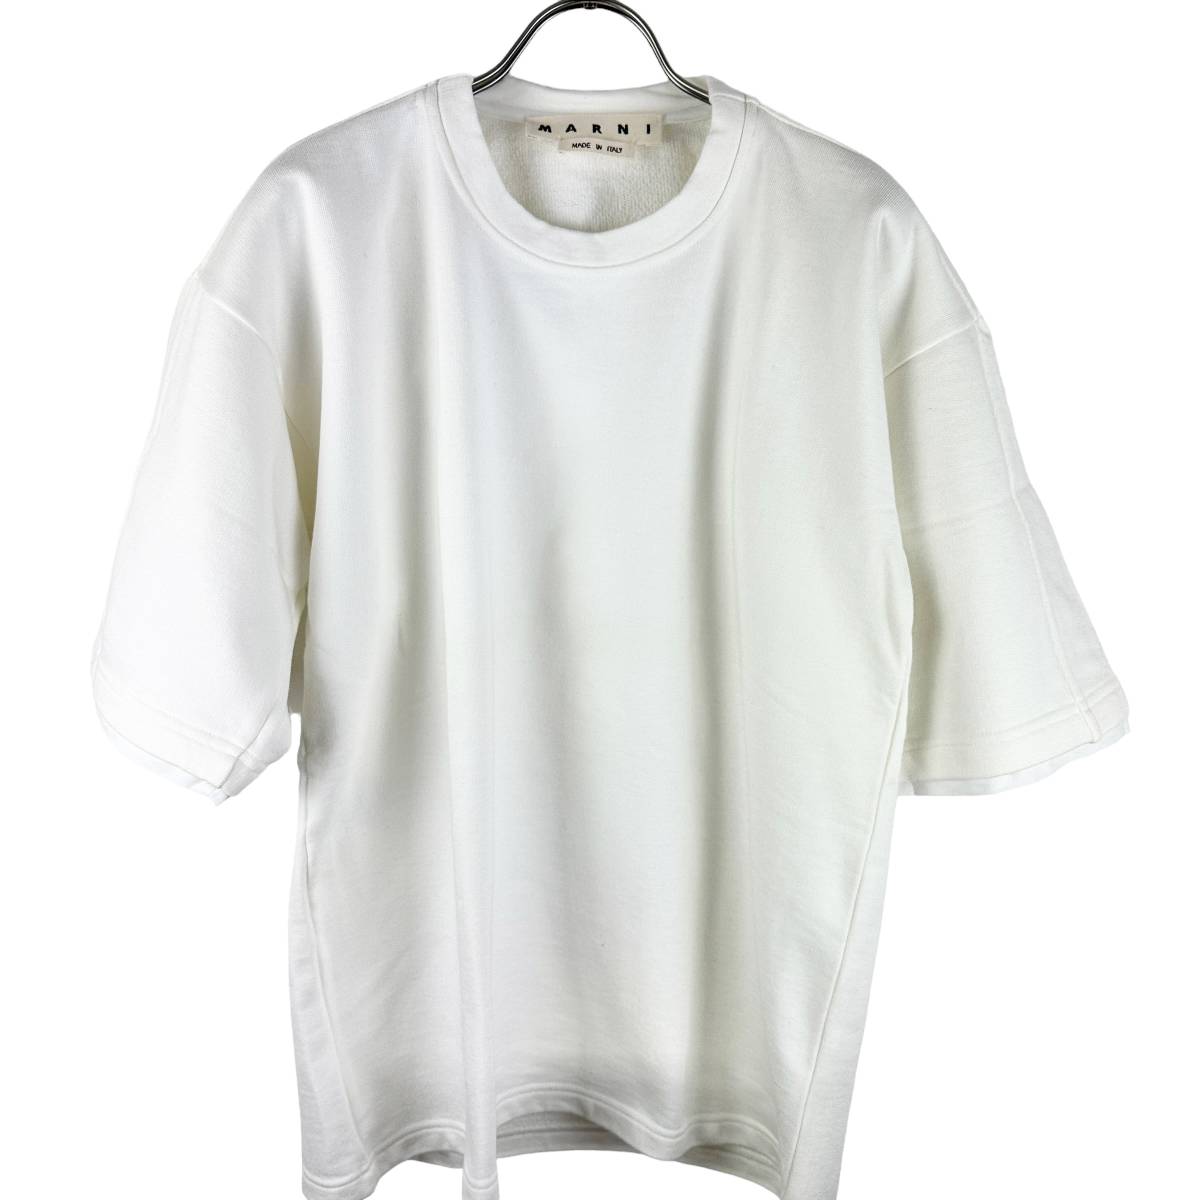 MARNI(マルニ) Thick Material T Shirt (white)_画像2